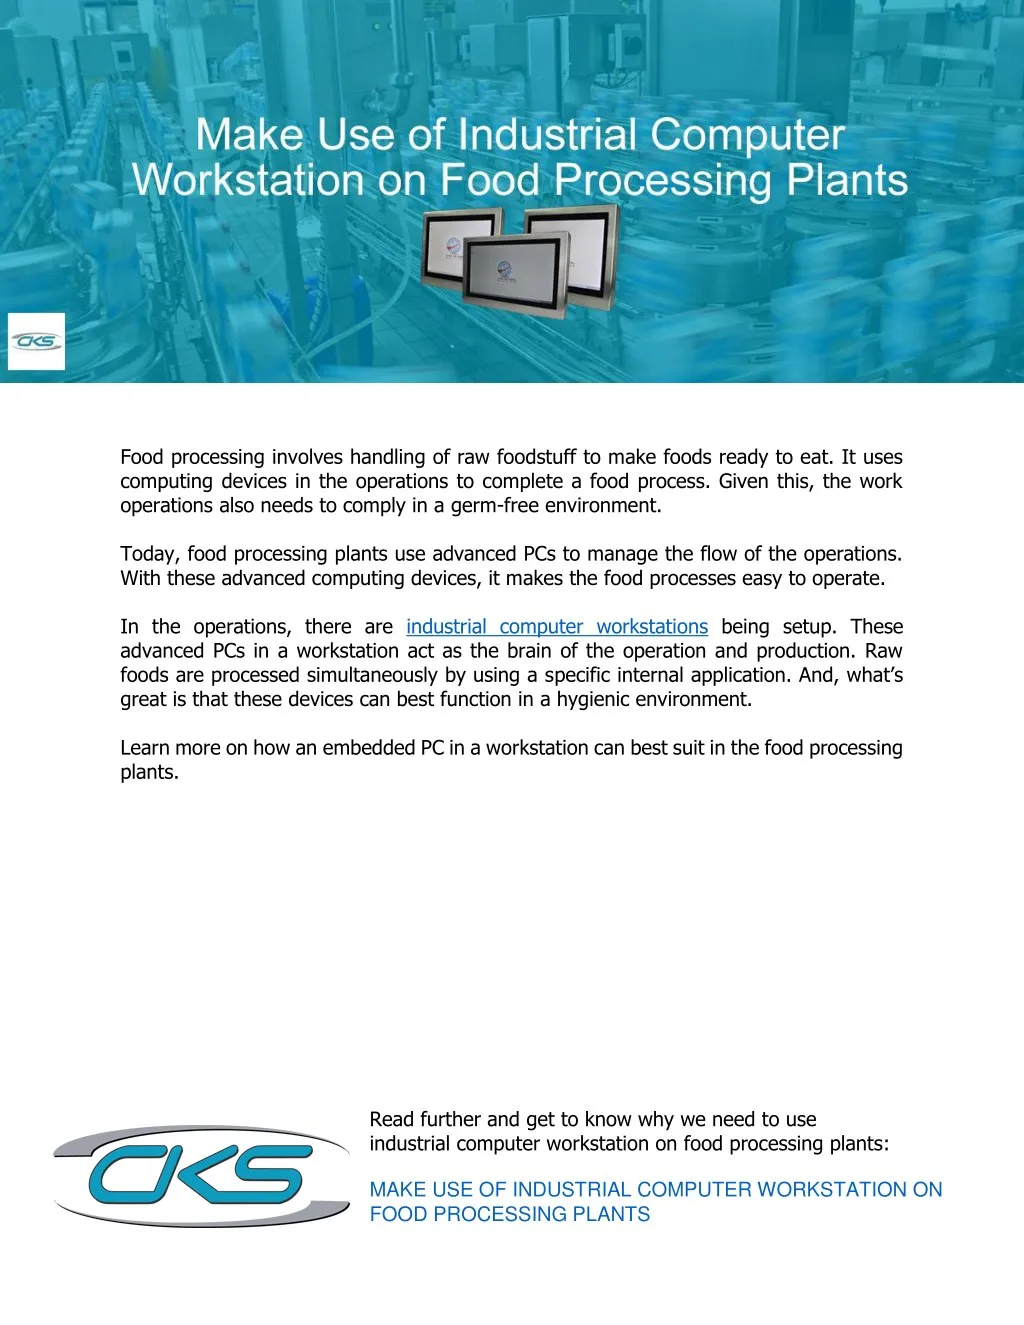 food processing involves handling